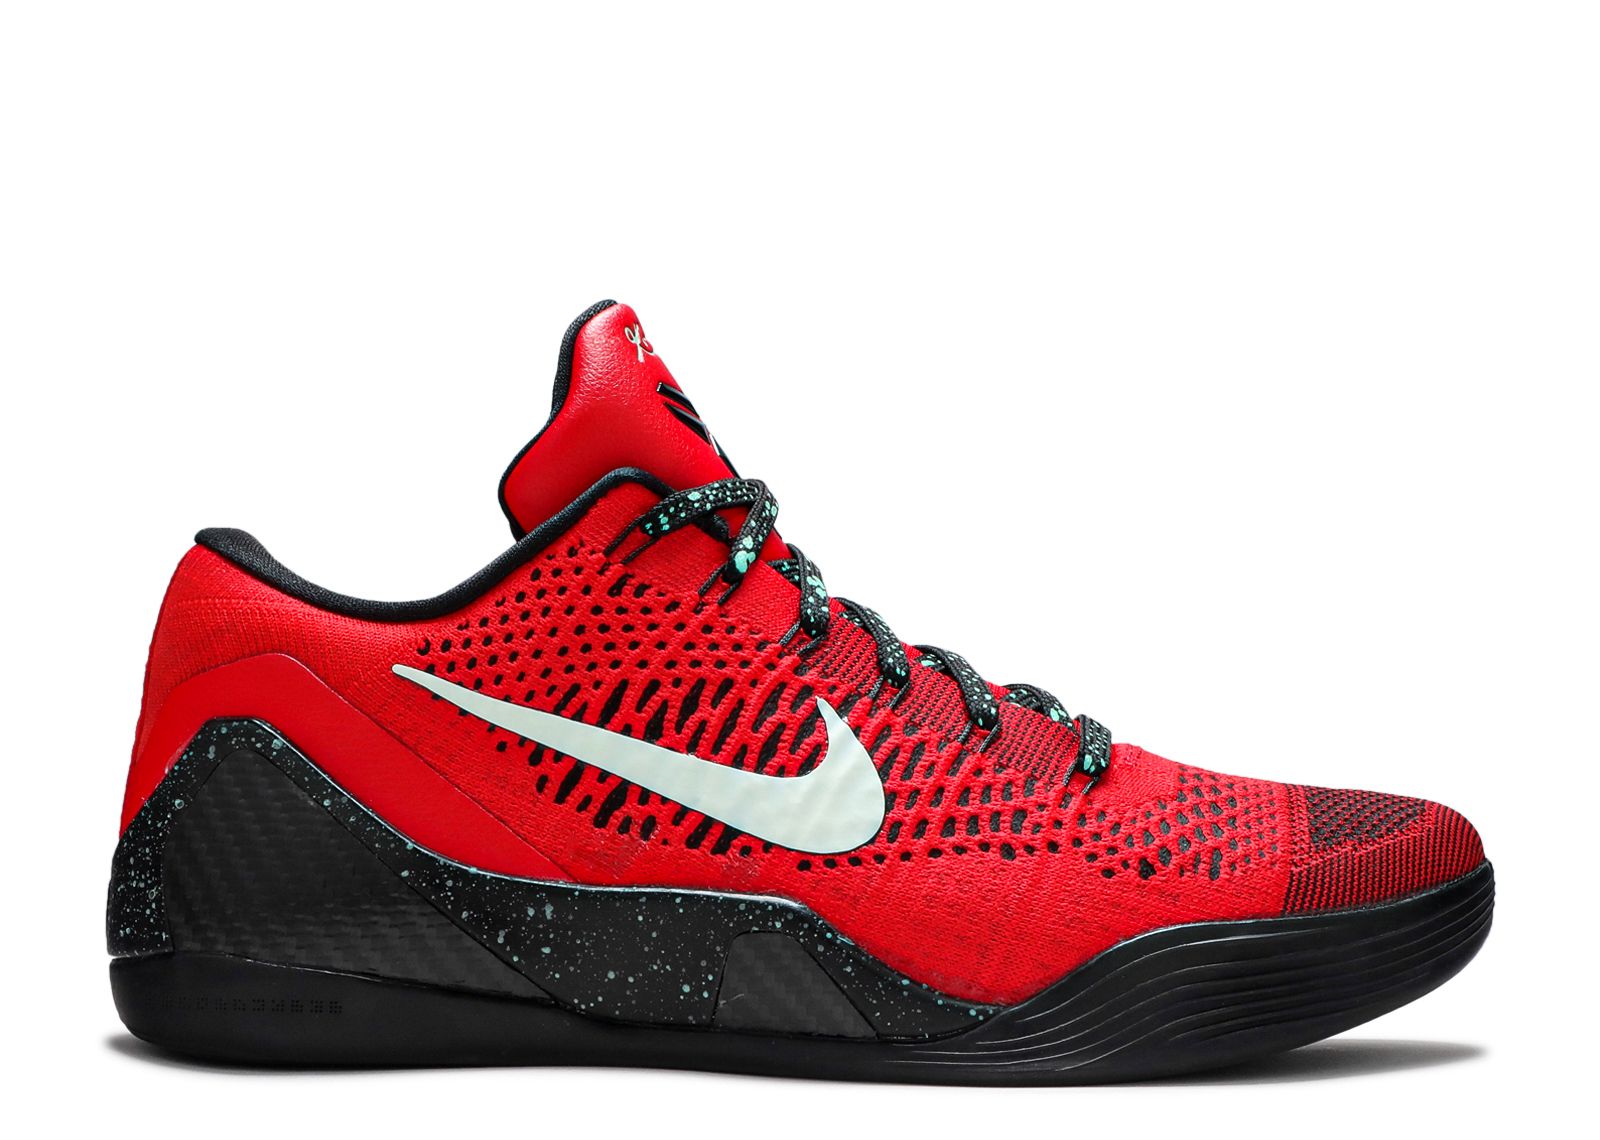 Kobe 9 Elite Low 'University Red' - Nike - 639045 600 - university red ... Kobe 9 Low On Feet